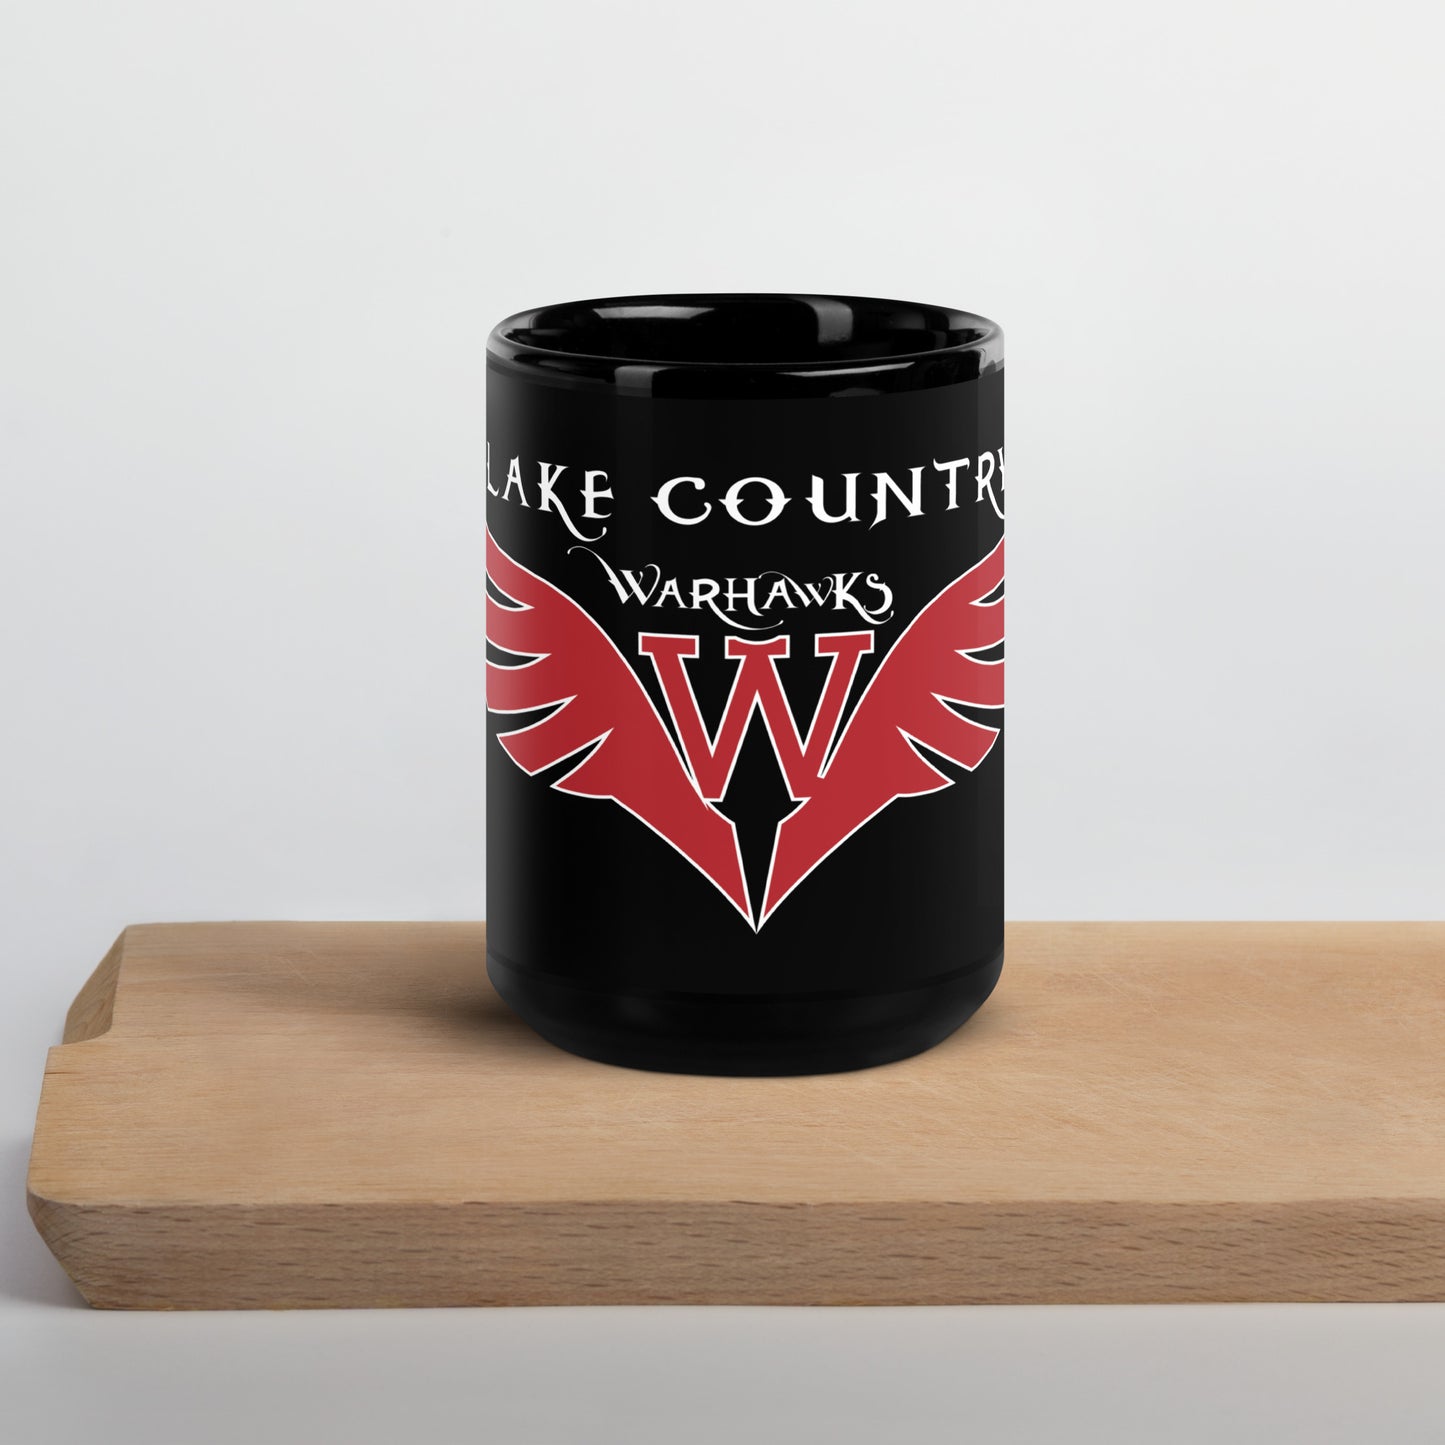 L:ake Country Warhawks Black Glossy Mug